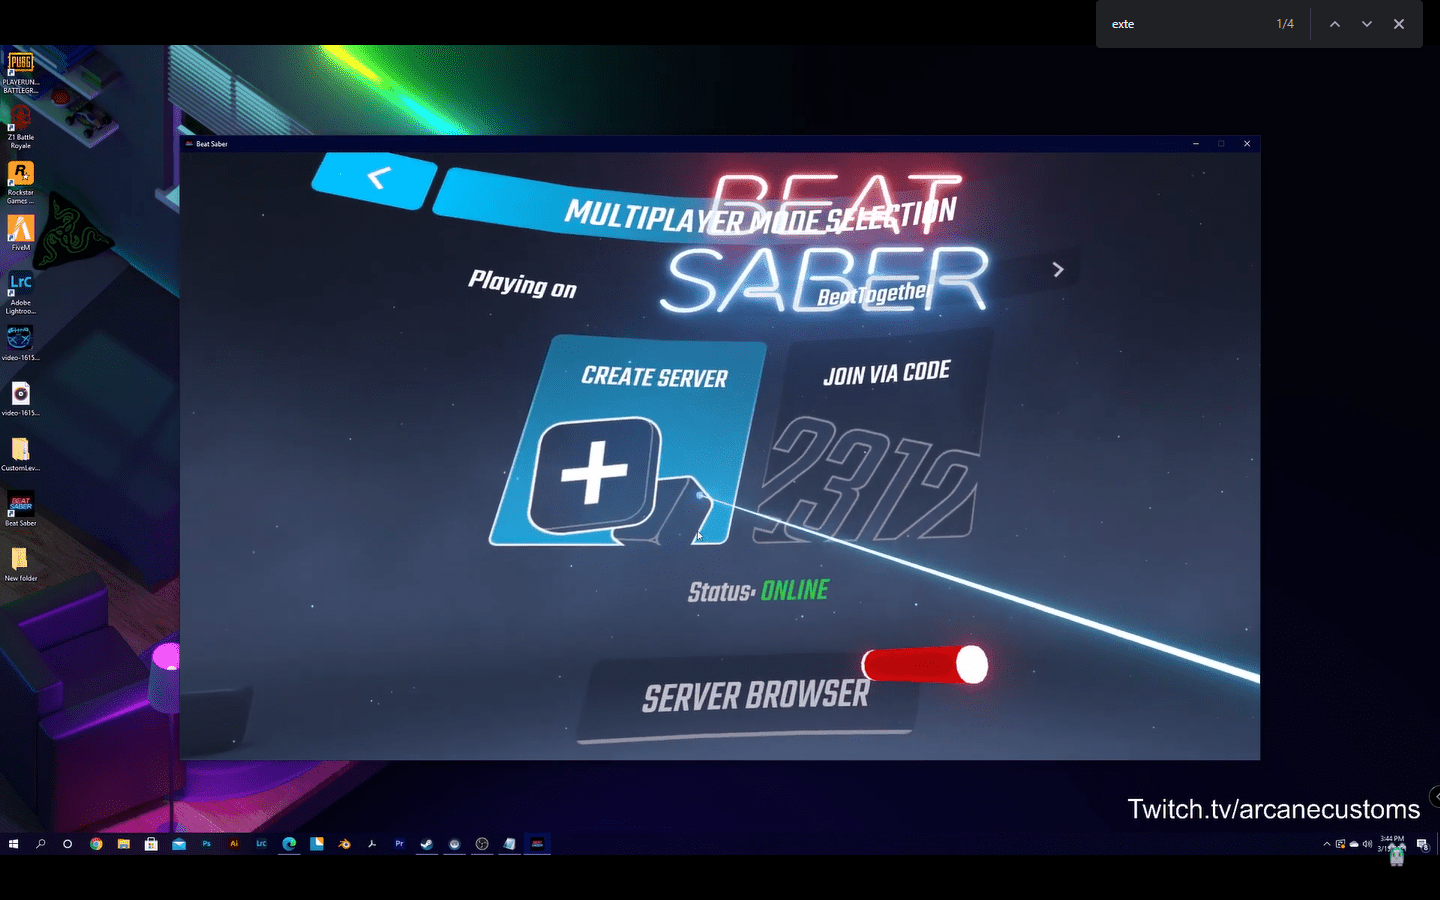 beat saber mod assistant update